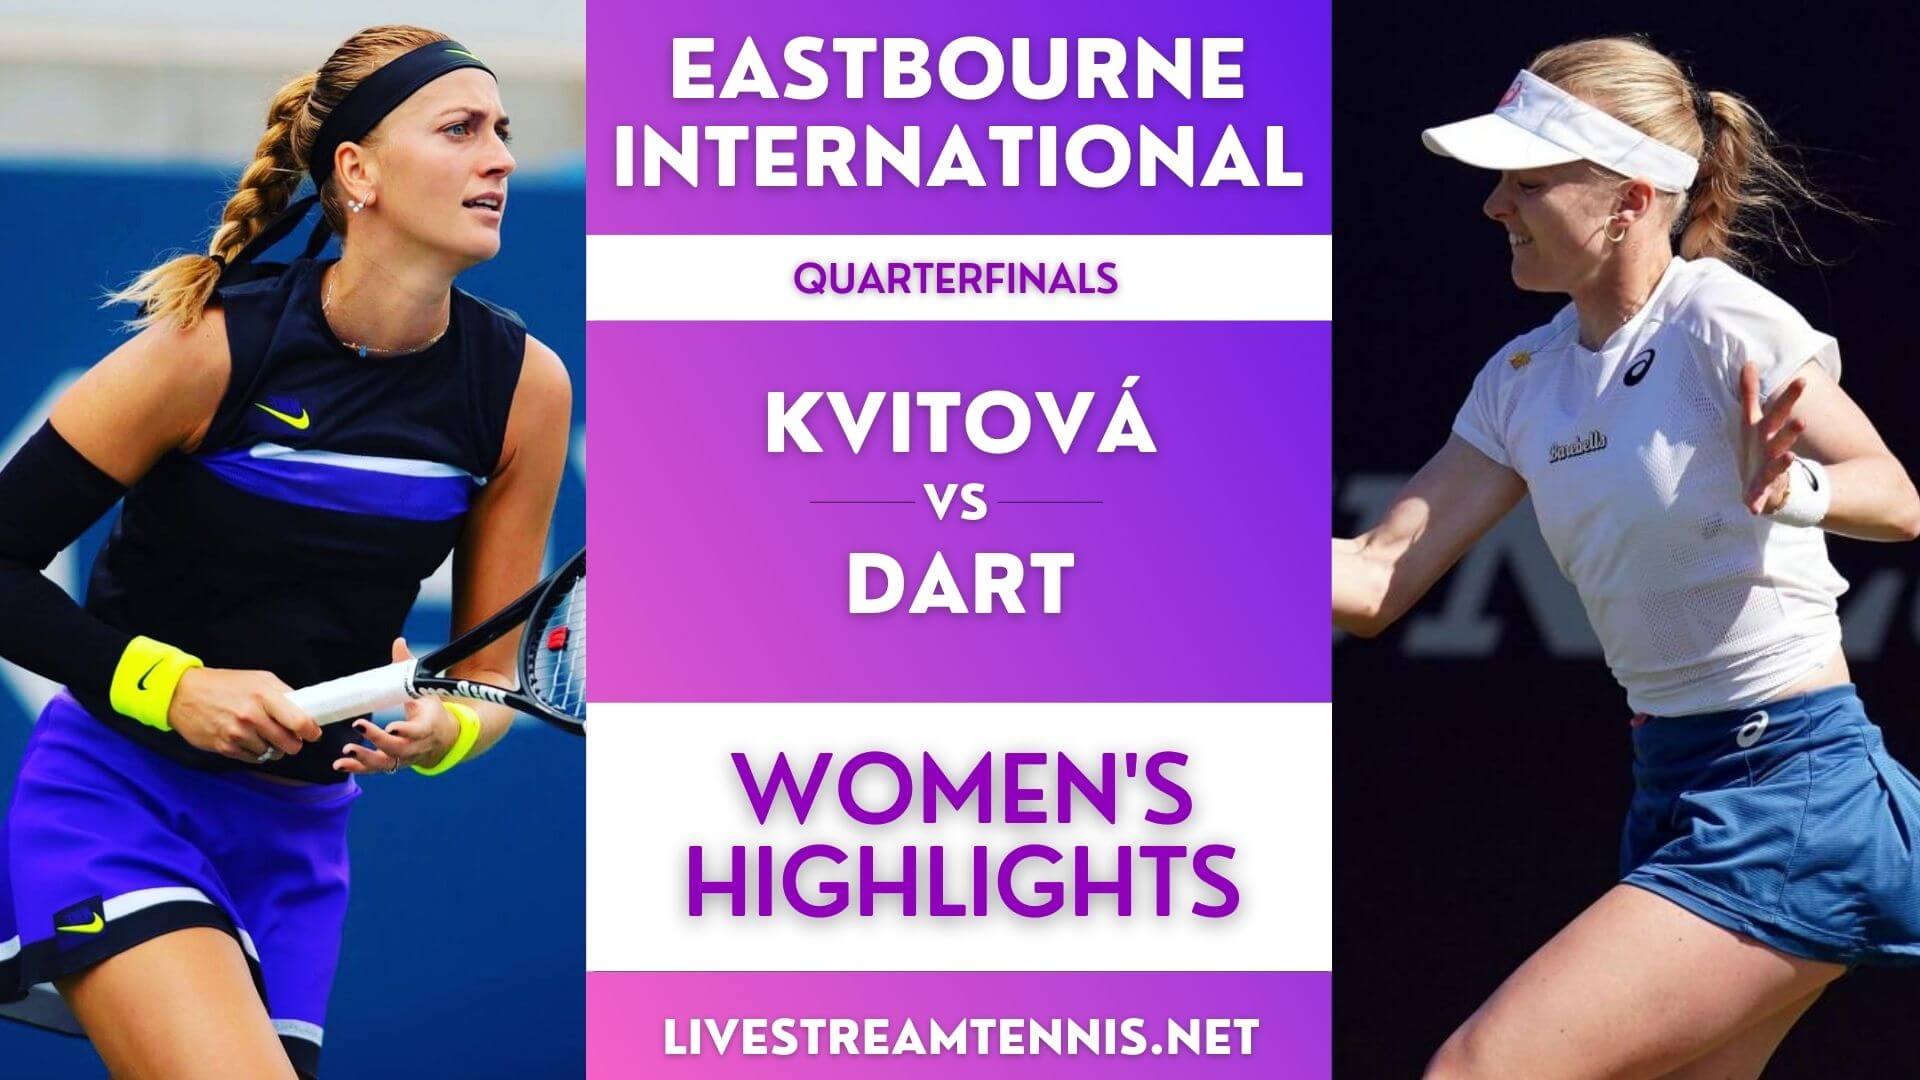 Eastbourne International Ladies Quarterfinal 2 Highlights 2022